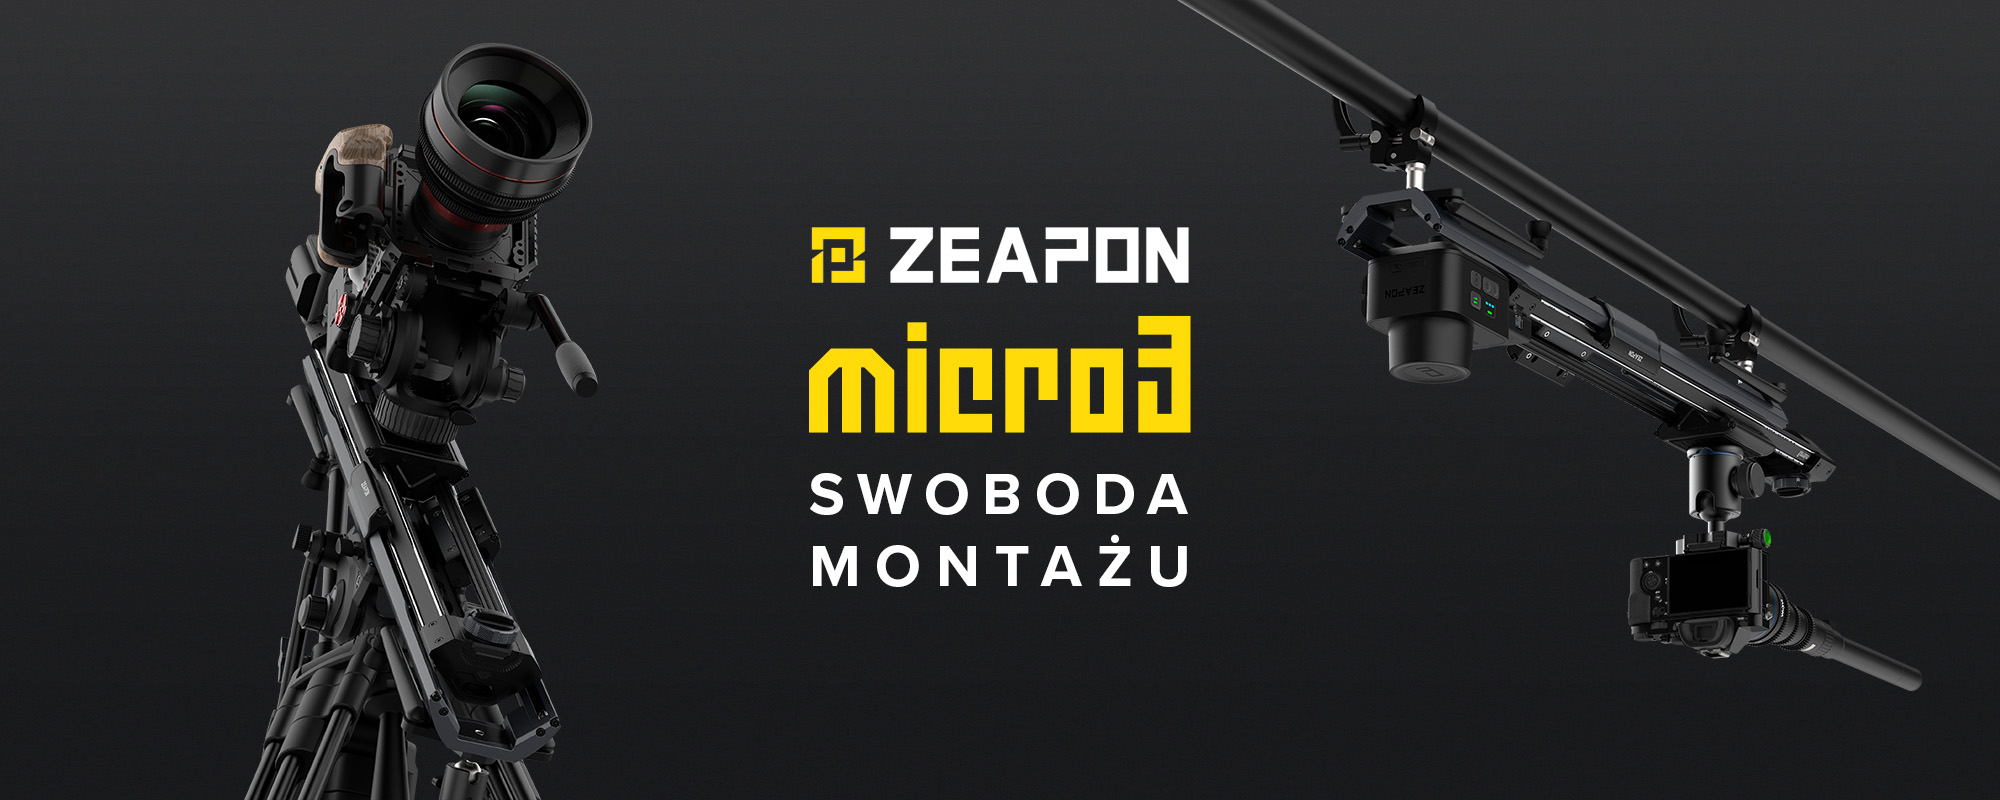 Slider Zeapon Micro 3 M700 - Nowe sposoby pracy